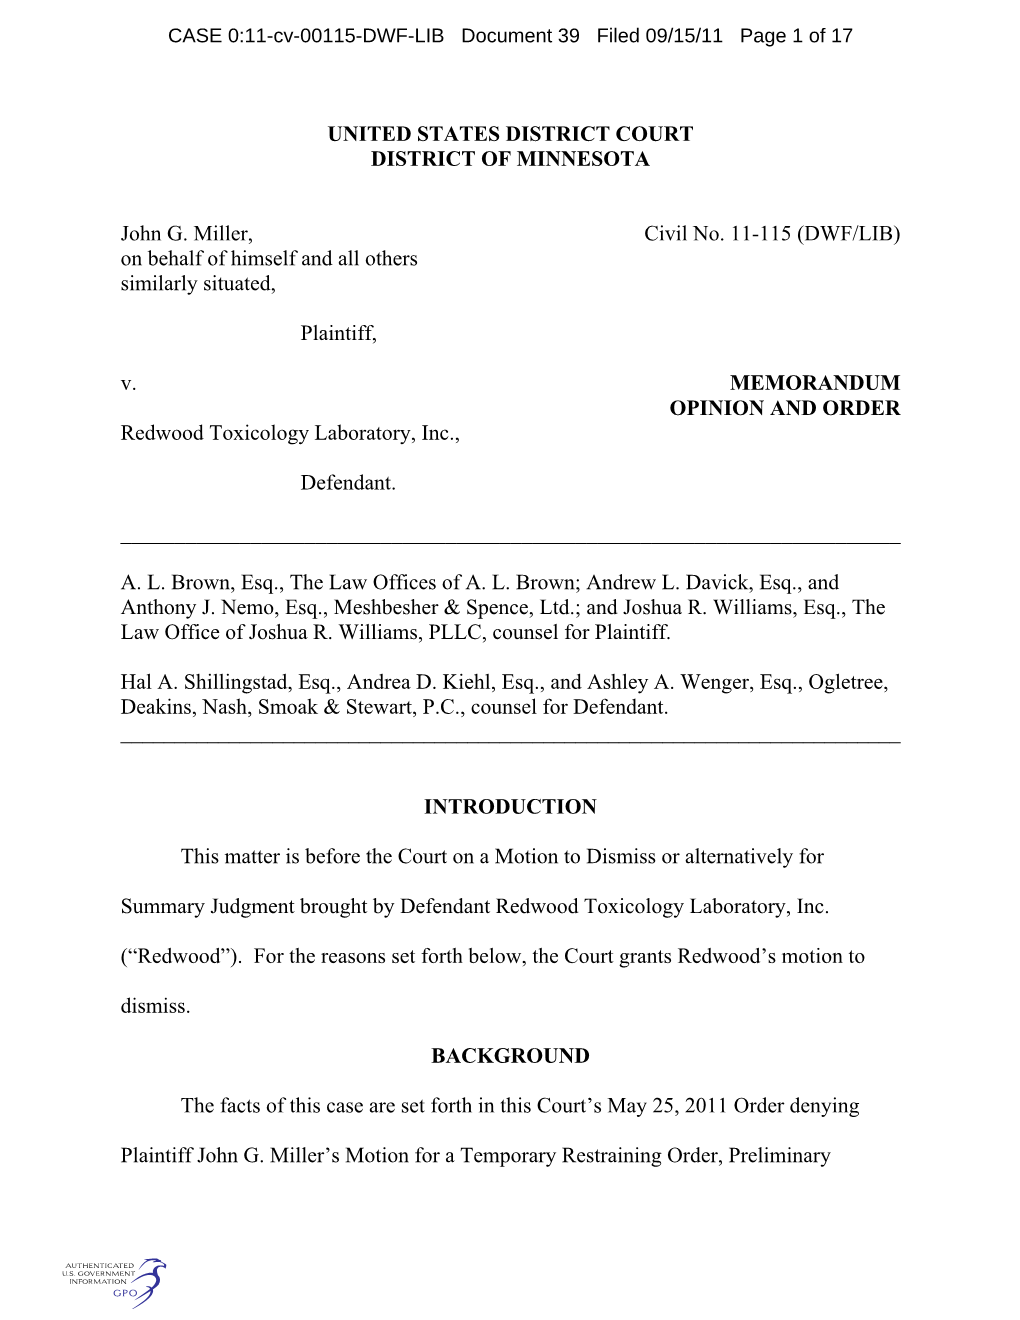 CASE 0:11-Cv-00115-DWF-LIB Document 39 Filed 09/15/11 Page 1 of 17